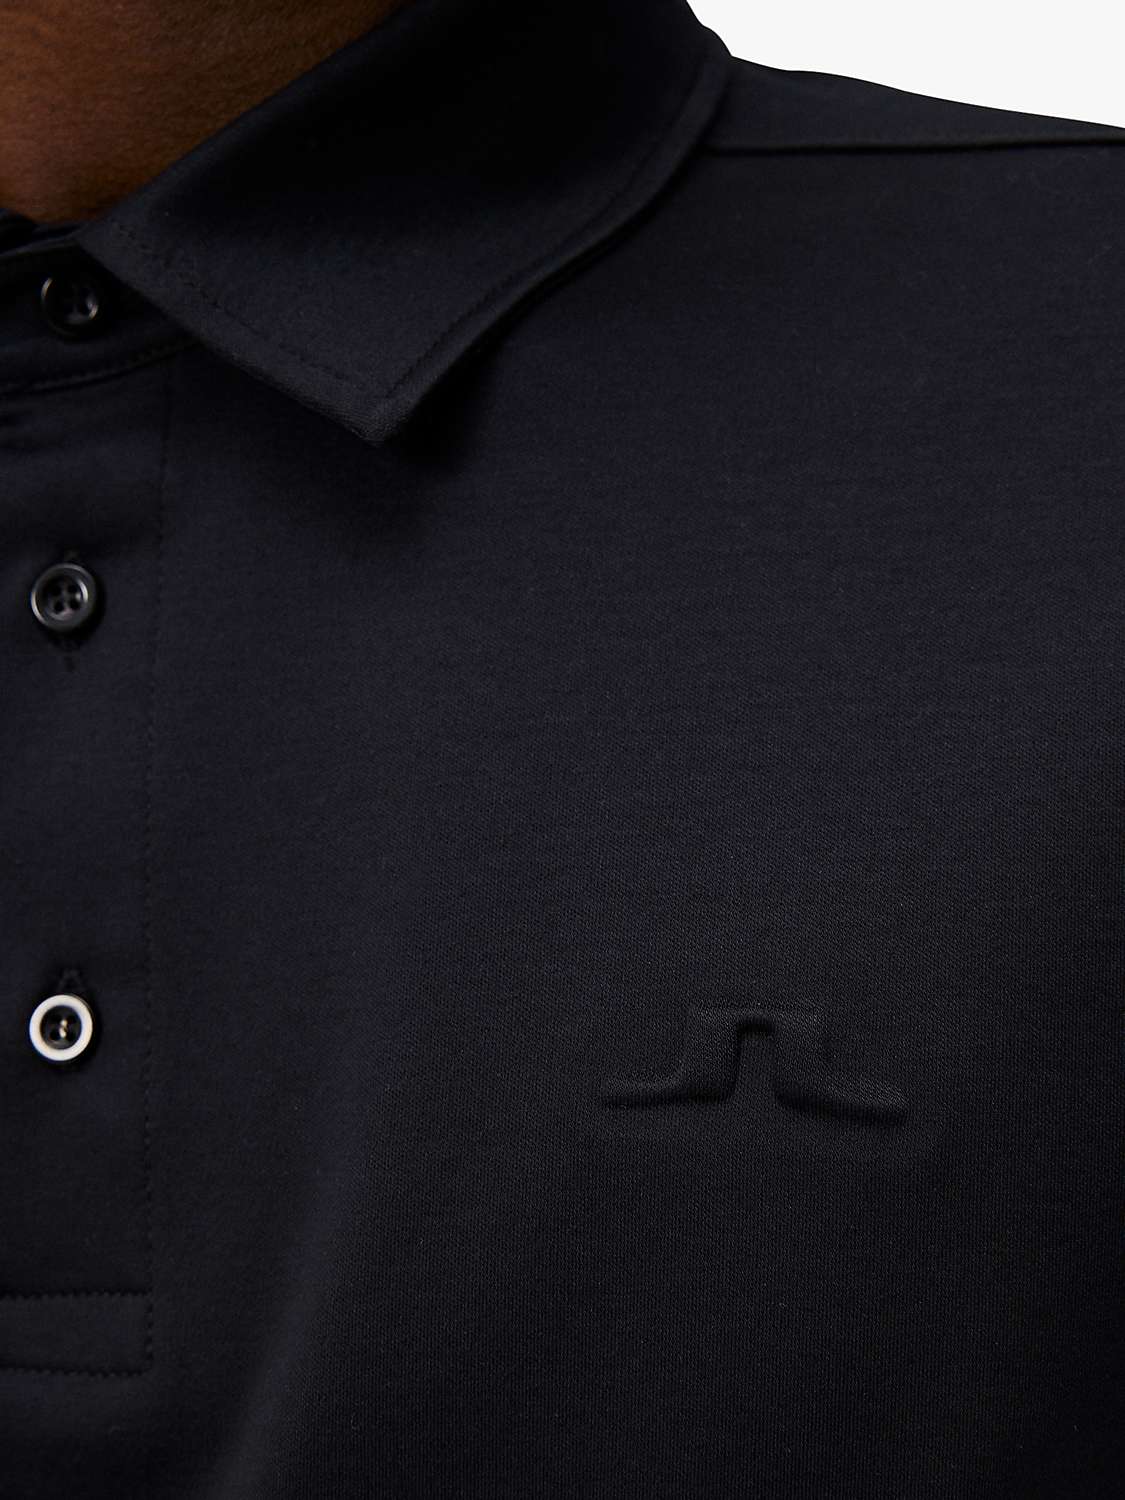 Buy J.Lindeberg Asher Long Sleeve Polo Shirt Online at johnlewis.com